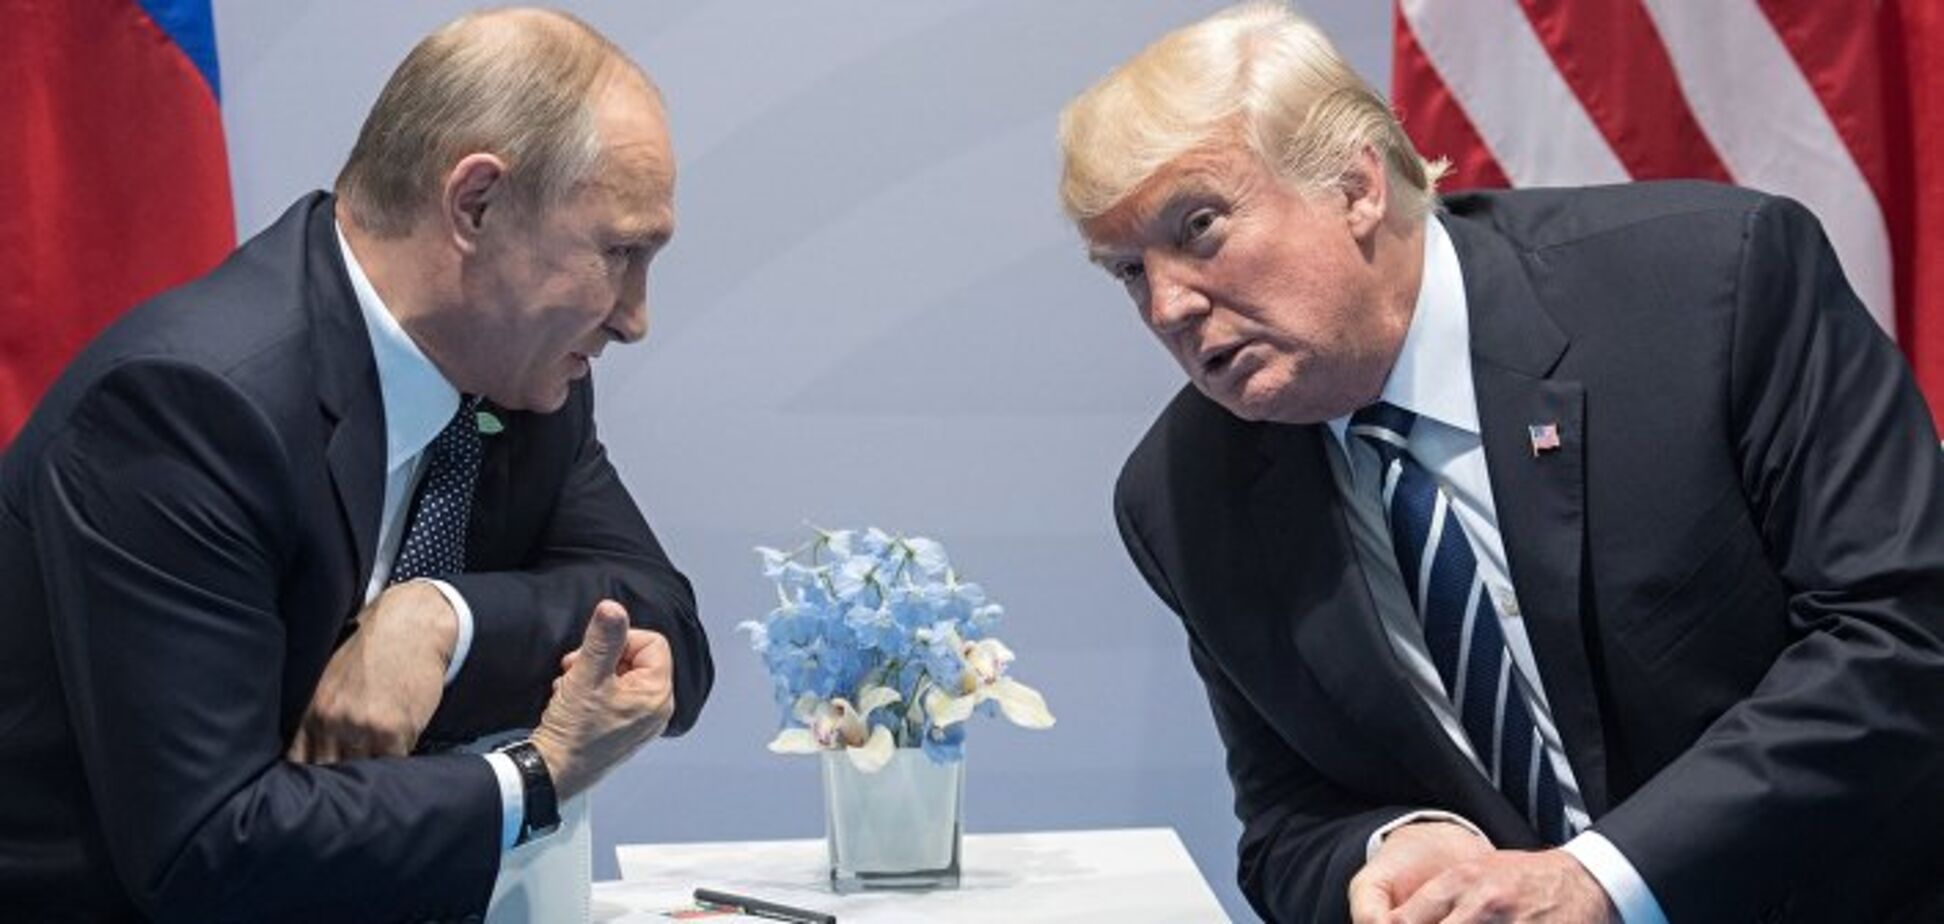 Названа возможная дата встречи Трампа и Путина - СМИ